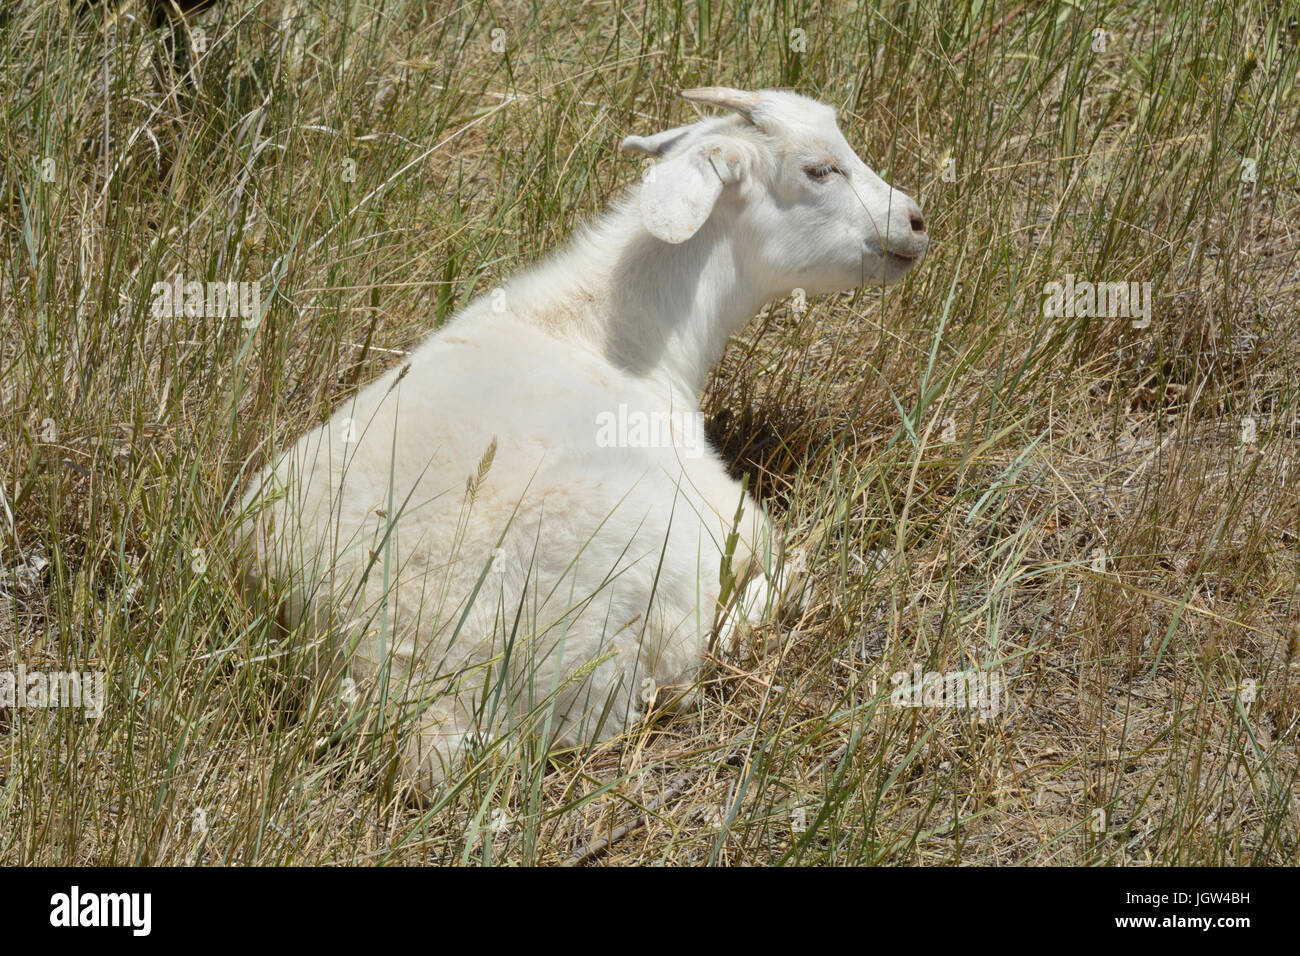 Kiko kid goat enjoying hot days of summer by grazing while resting in heat Stock Photo